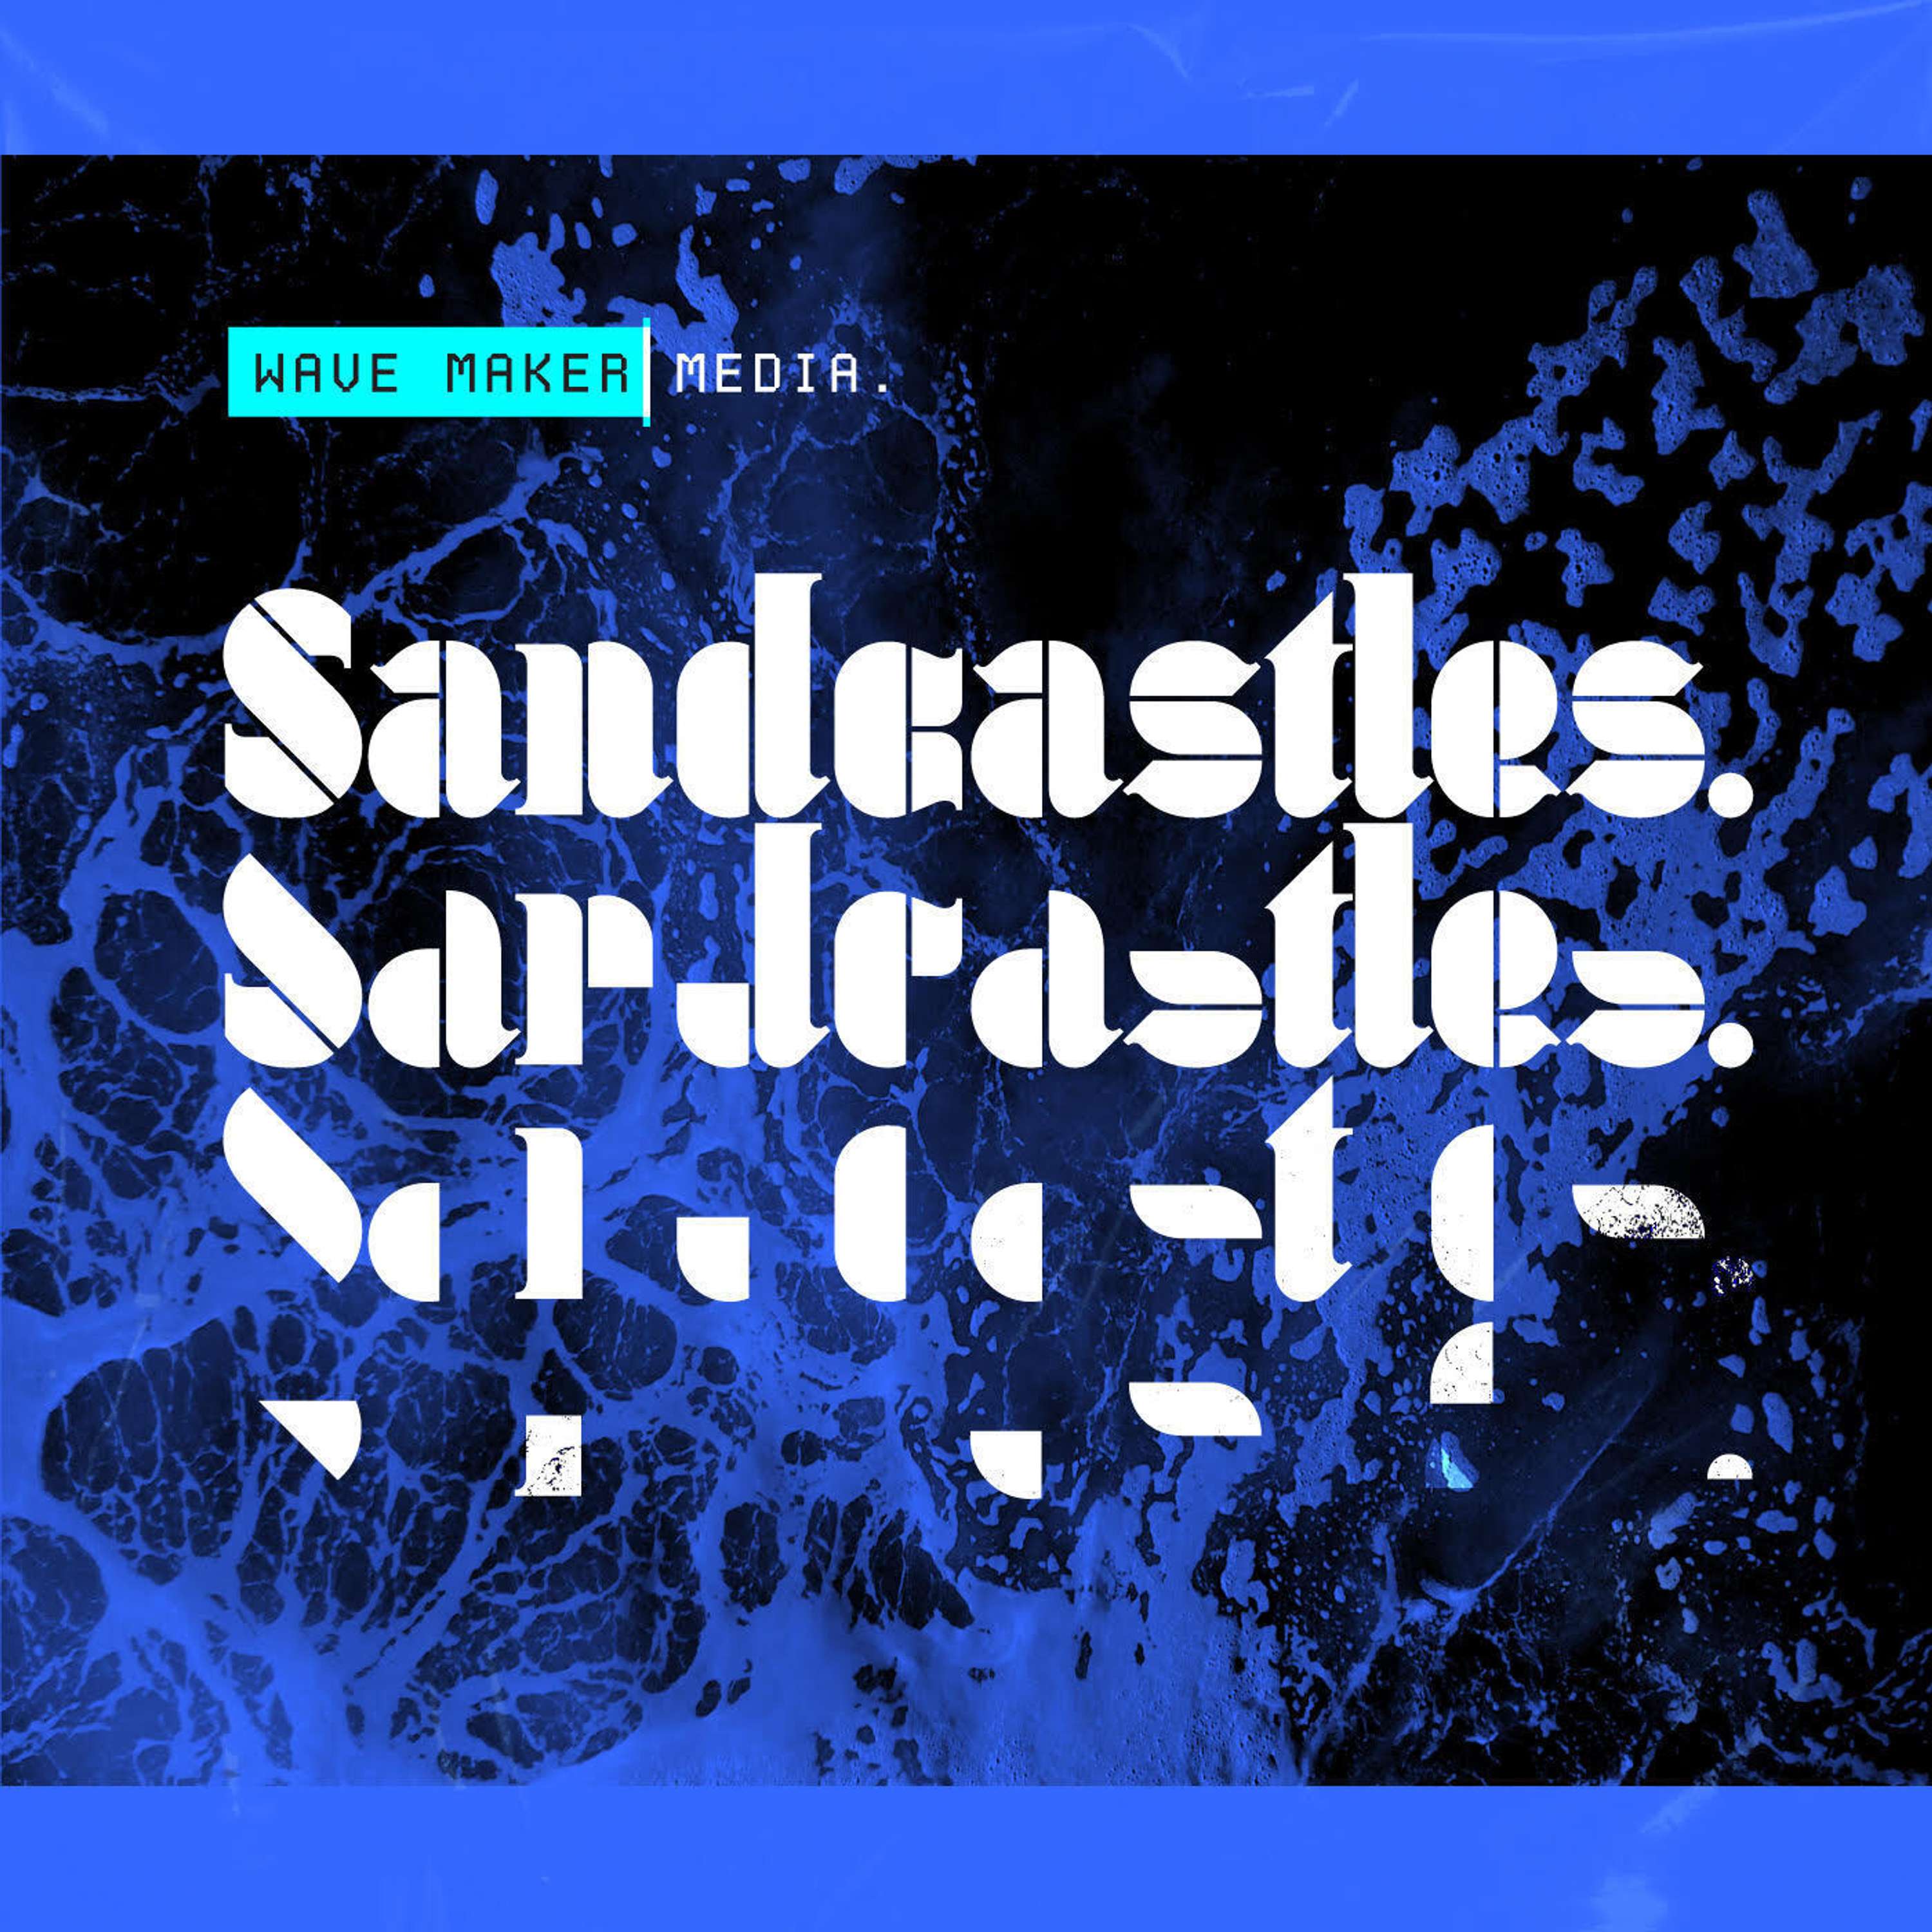 Sandcastles podcast show image